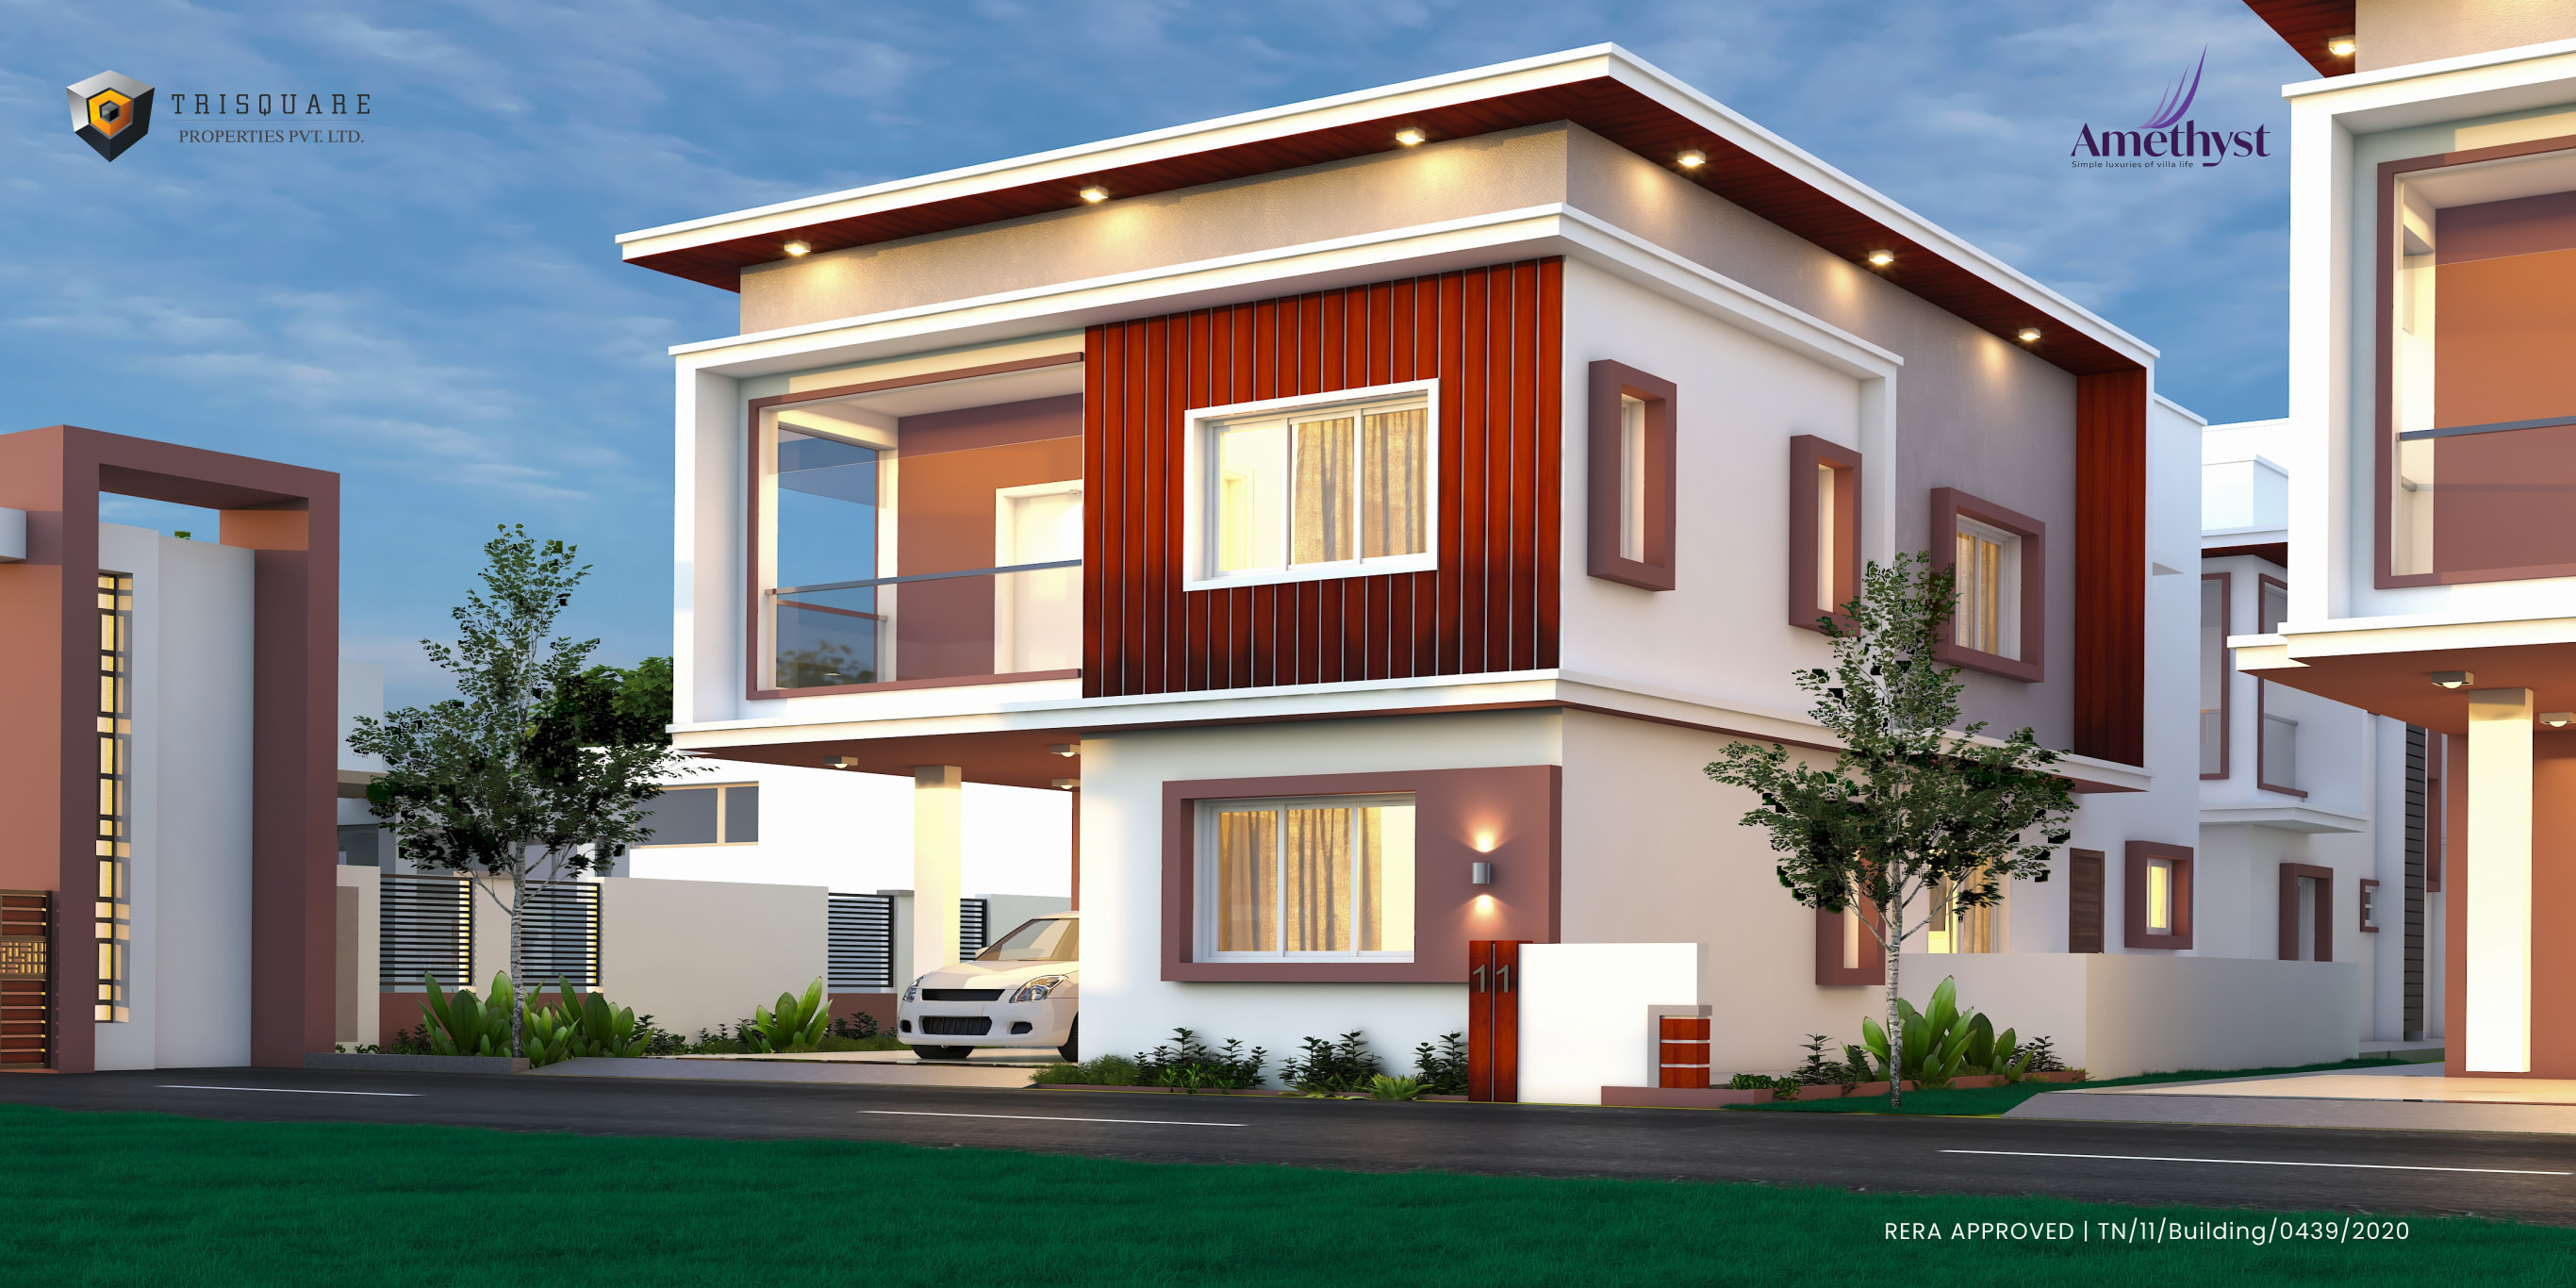 3 BHK Villa for Sale in Coimbatore - Trisquare Amethyst